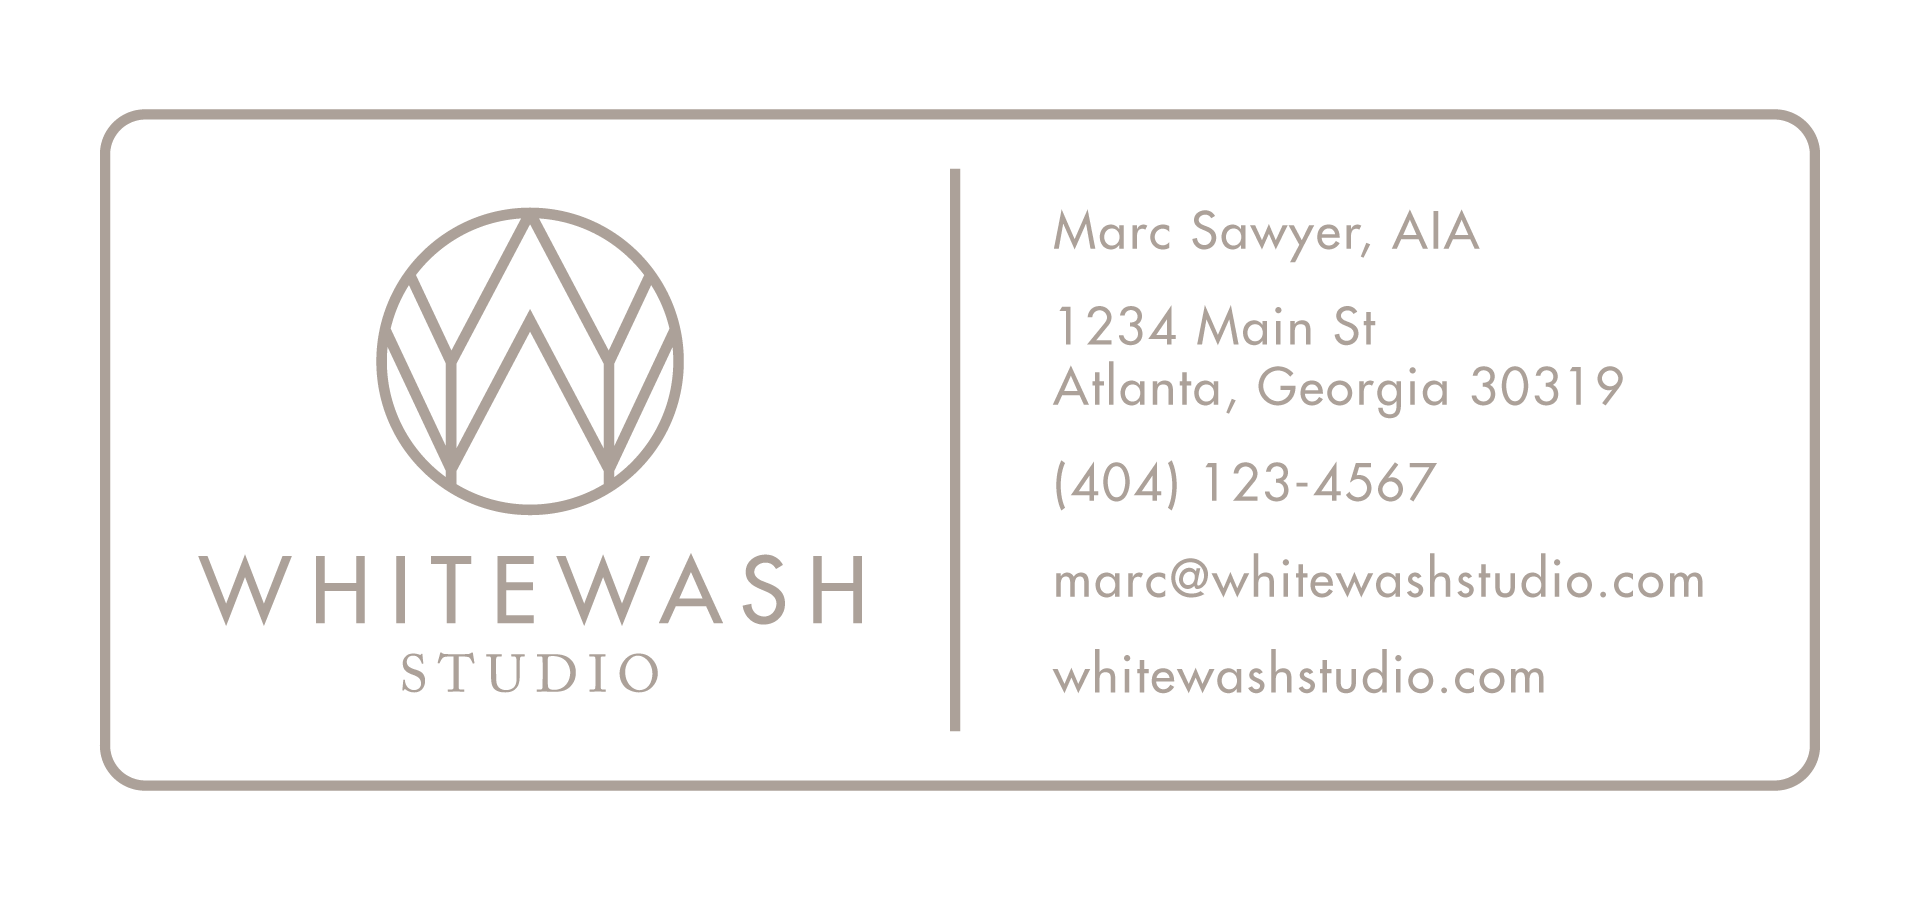 Whitewash Studio Contact Block